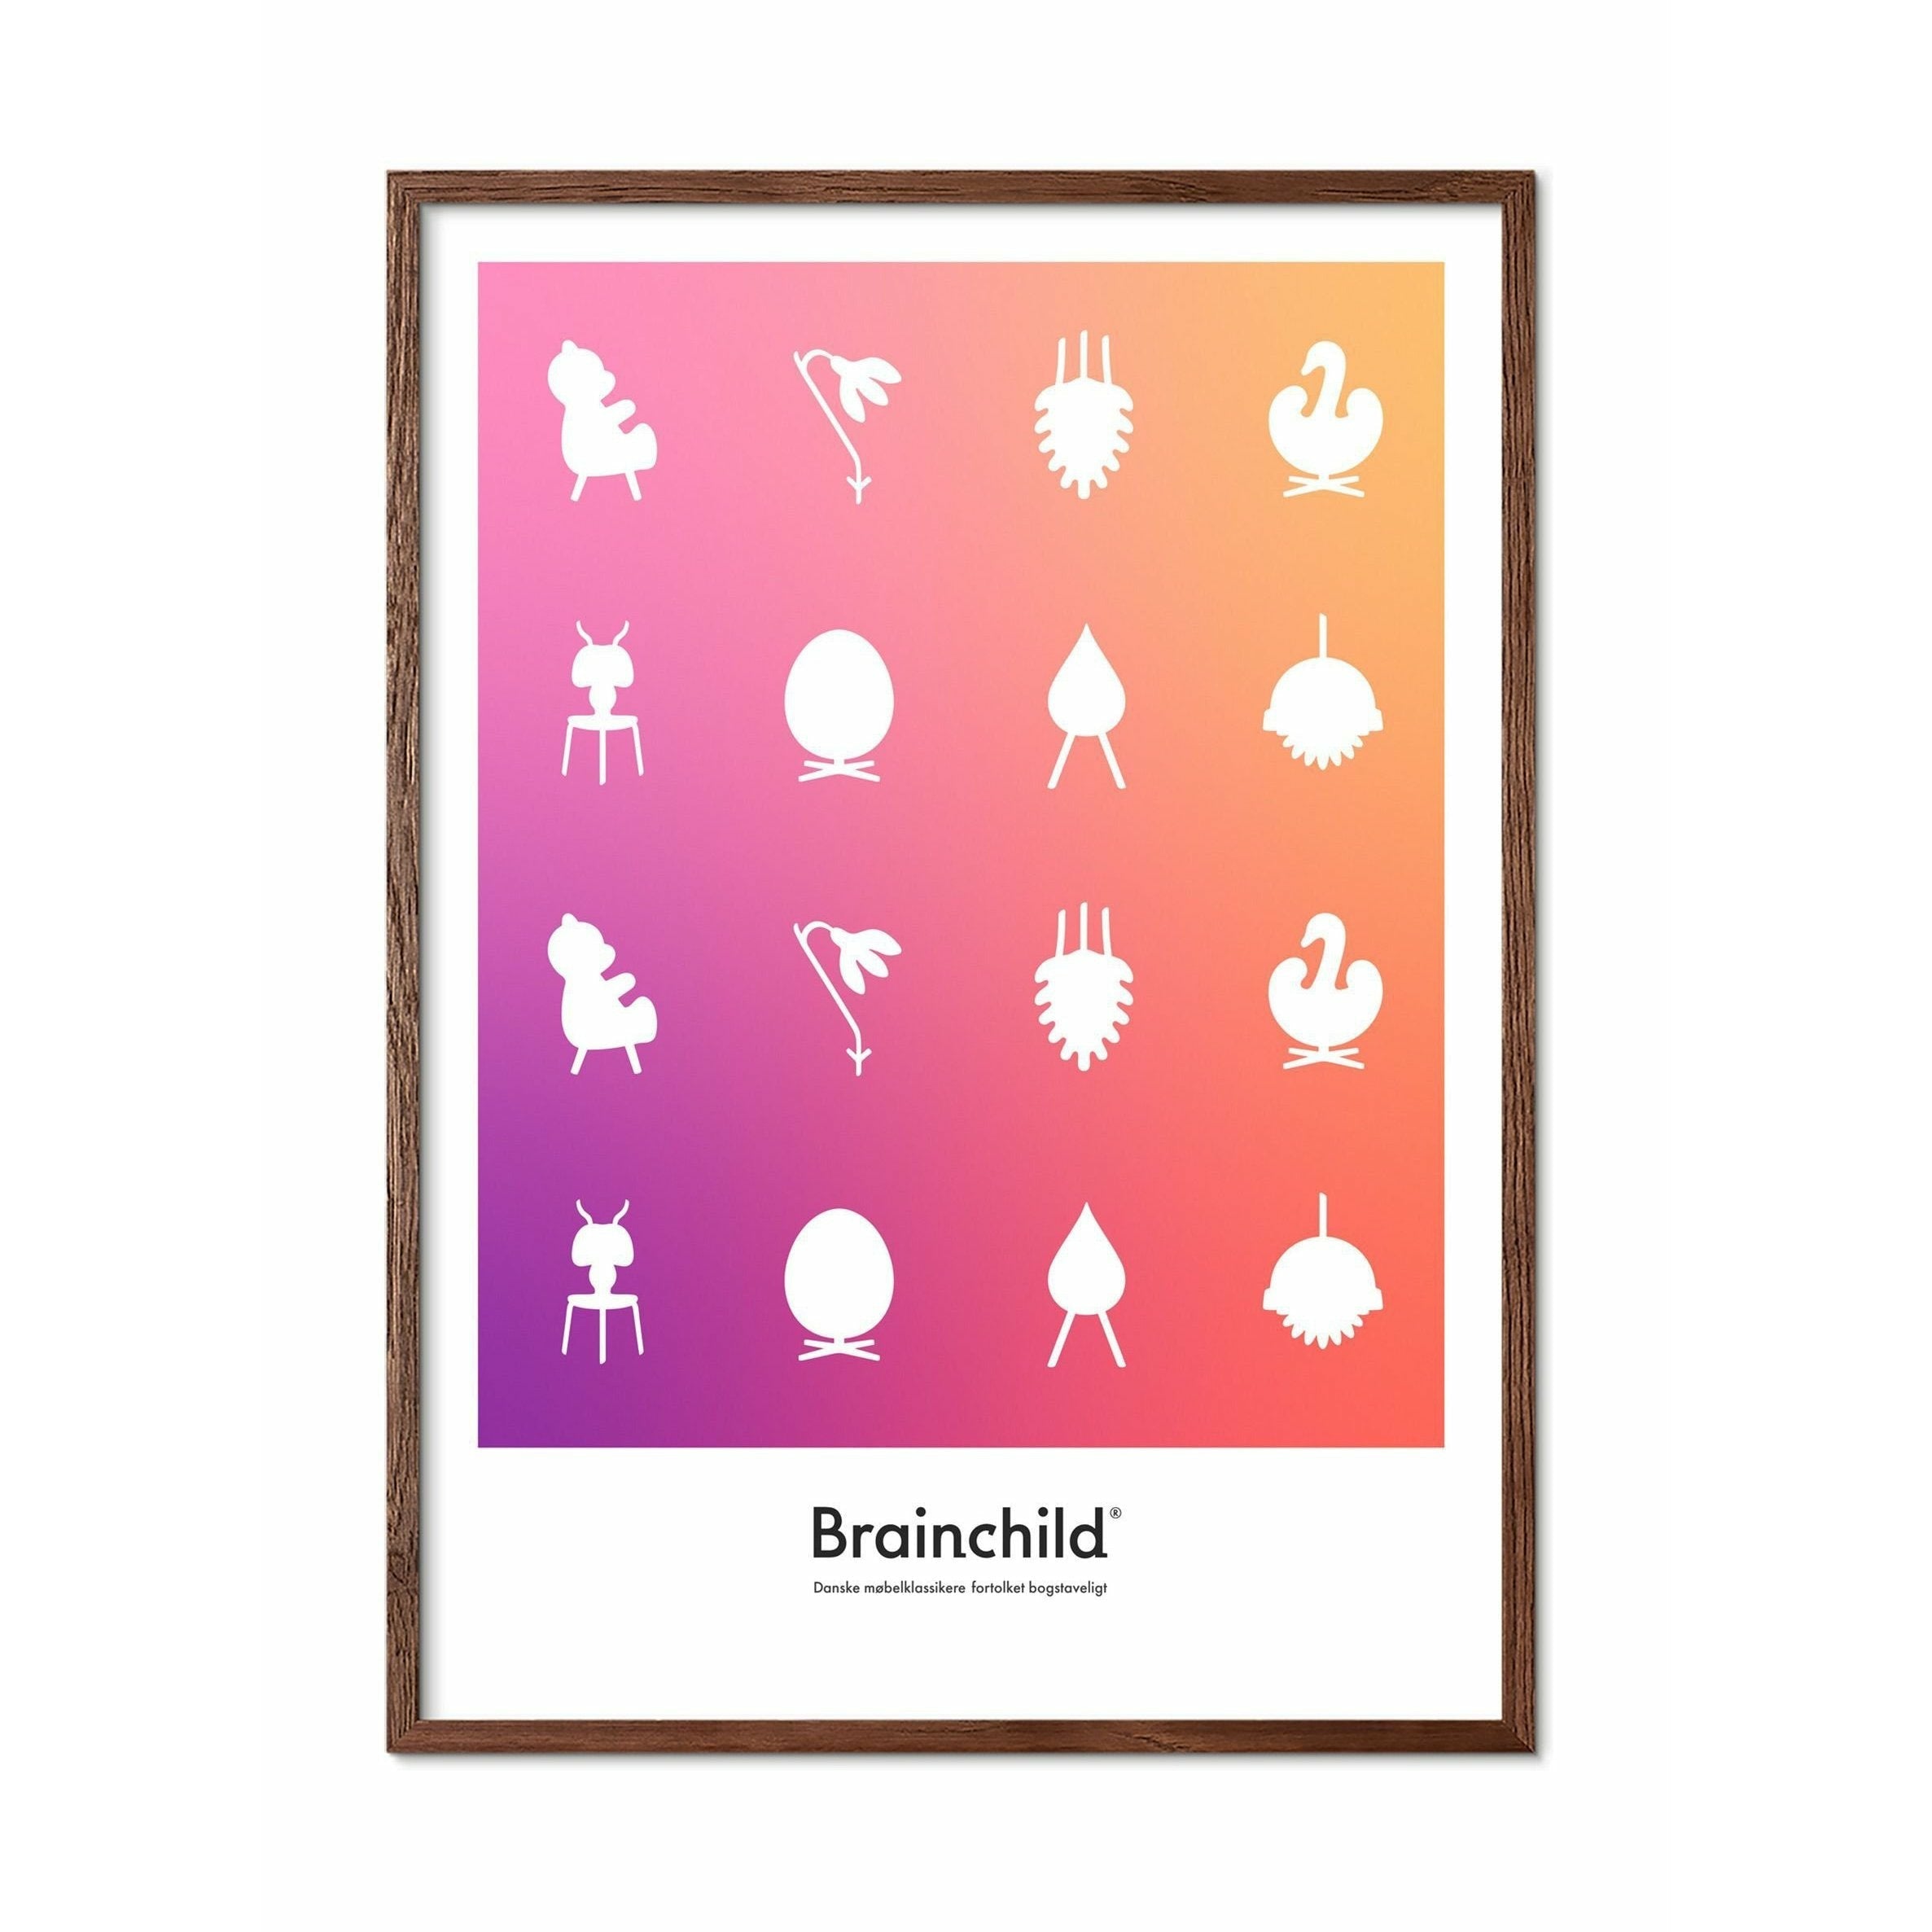 Brainchild Design Icon Poster, Dark Wood Frame A5, Colour